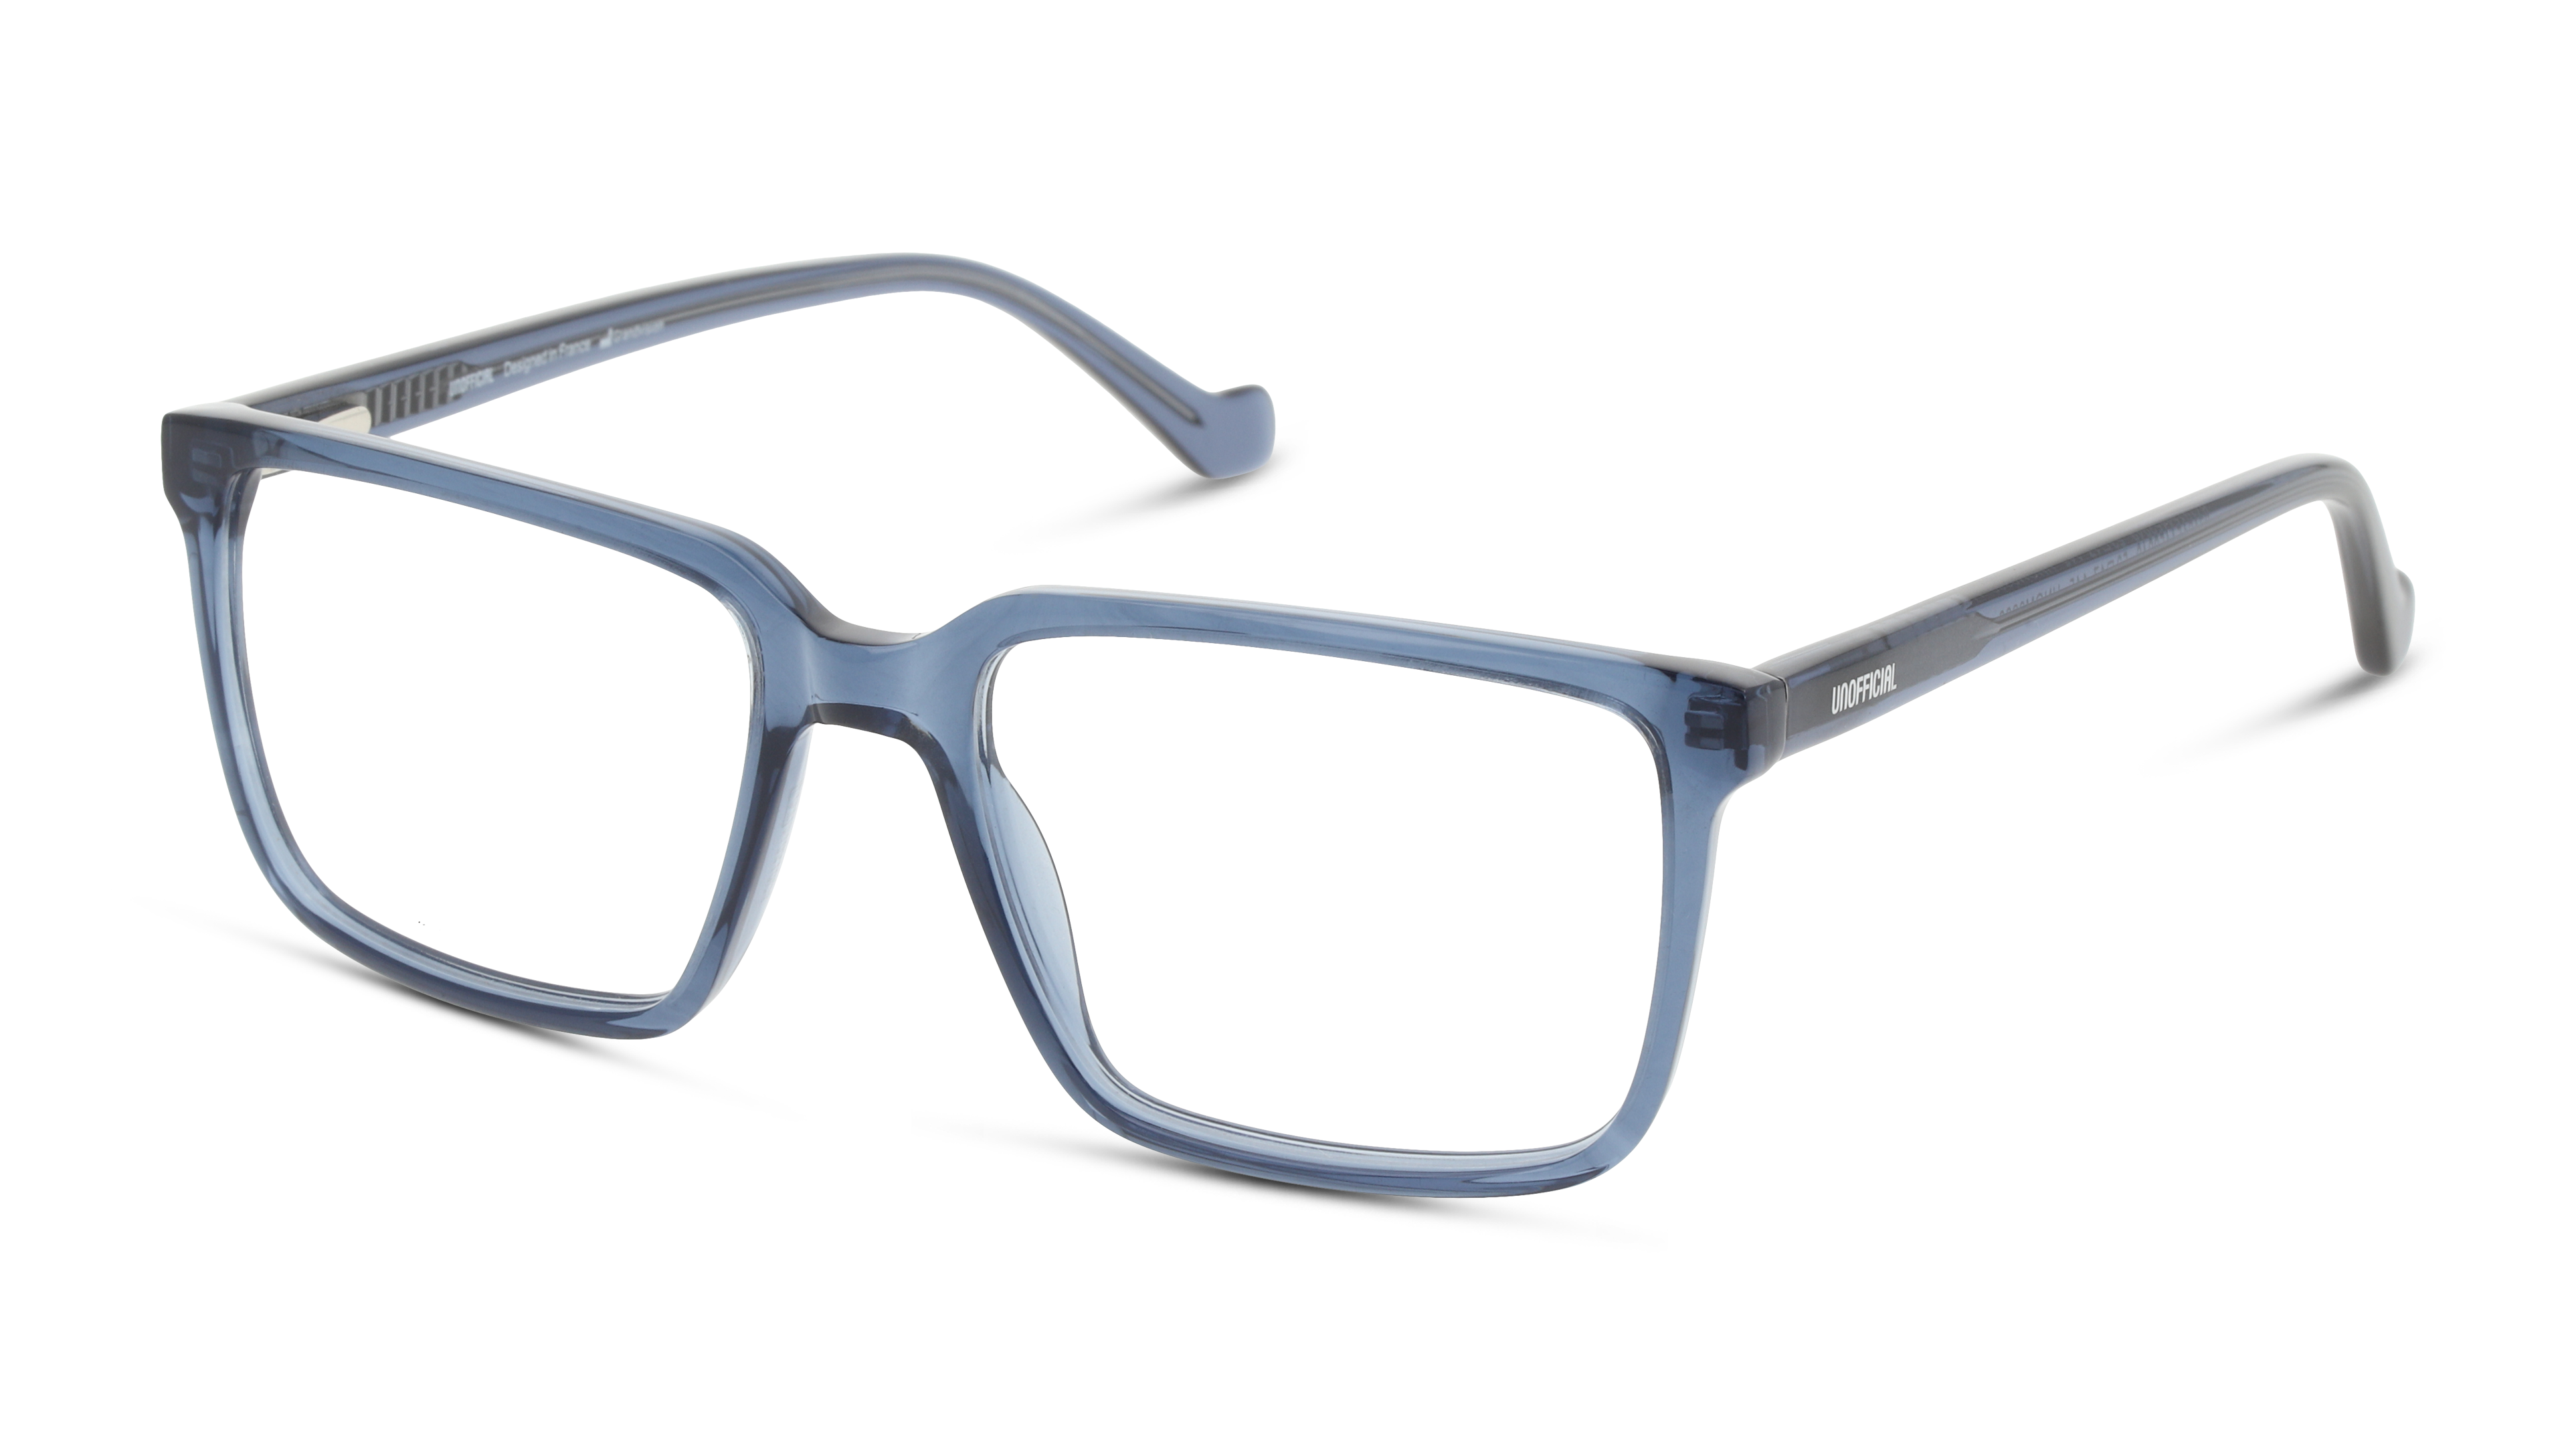 Angle_Left01 Unofficial UNOM0280 Glasses Transparent / Transparent, Blue